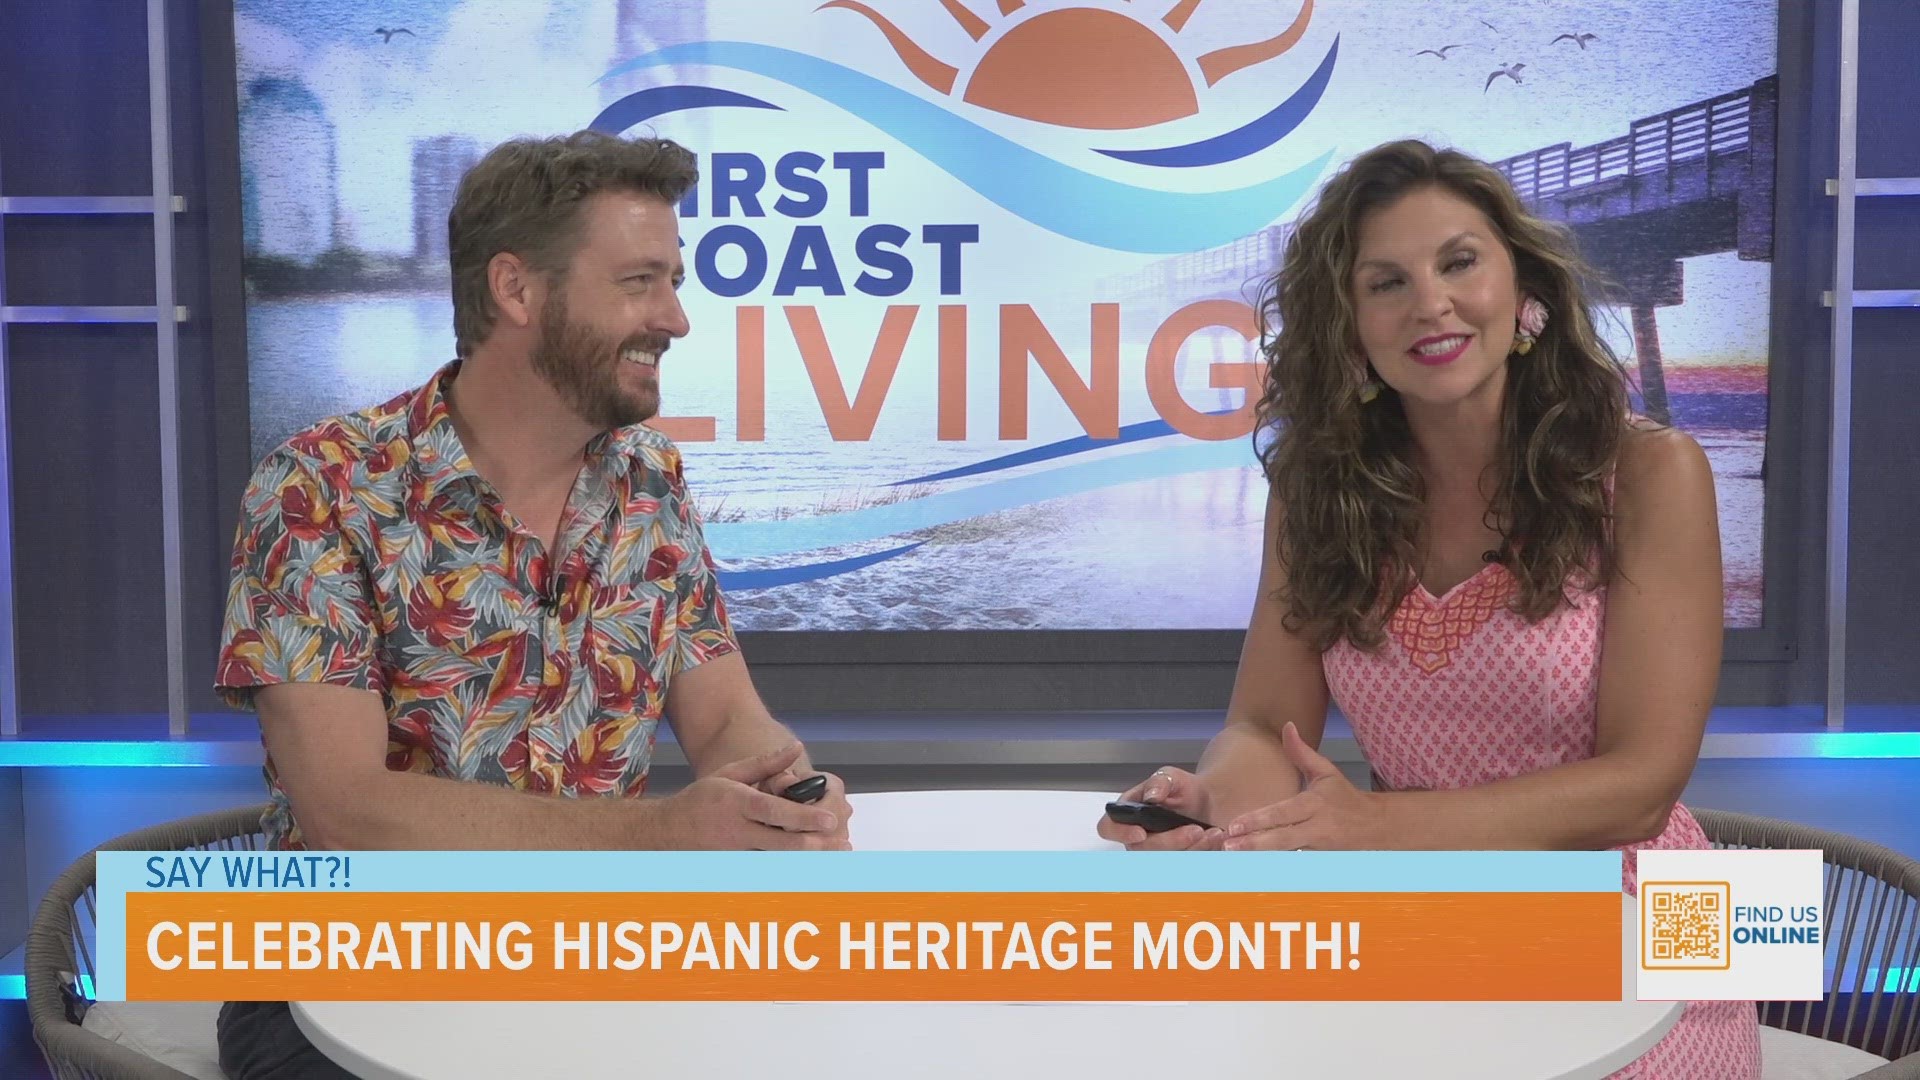 Celebrating Hispanic Heritage Month on First Coast Living!